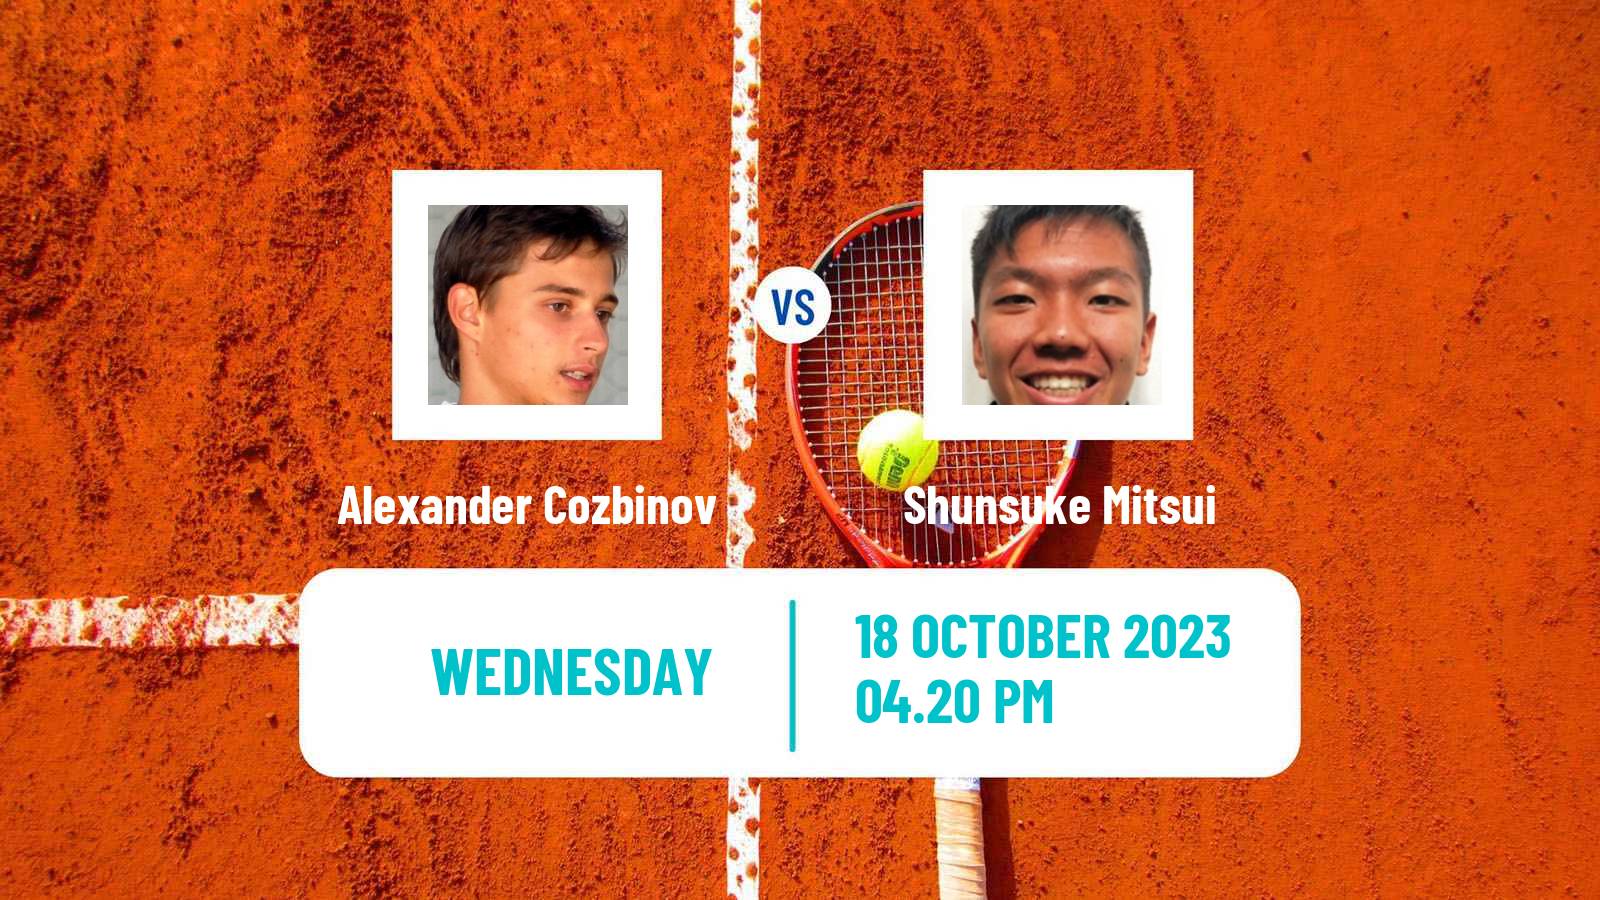 Tennis ITF M15 Las Vegas Nv Men Alexander Cozbinov - Shunsuke Mitsui